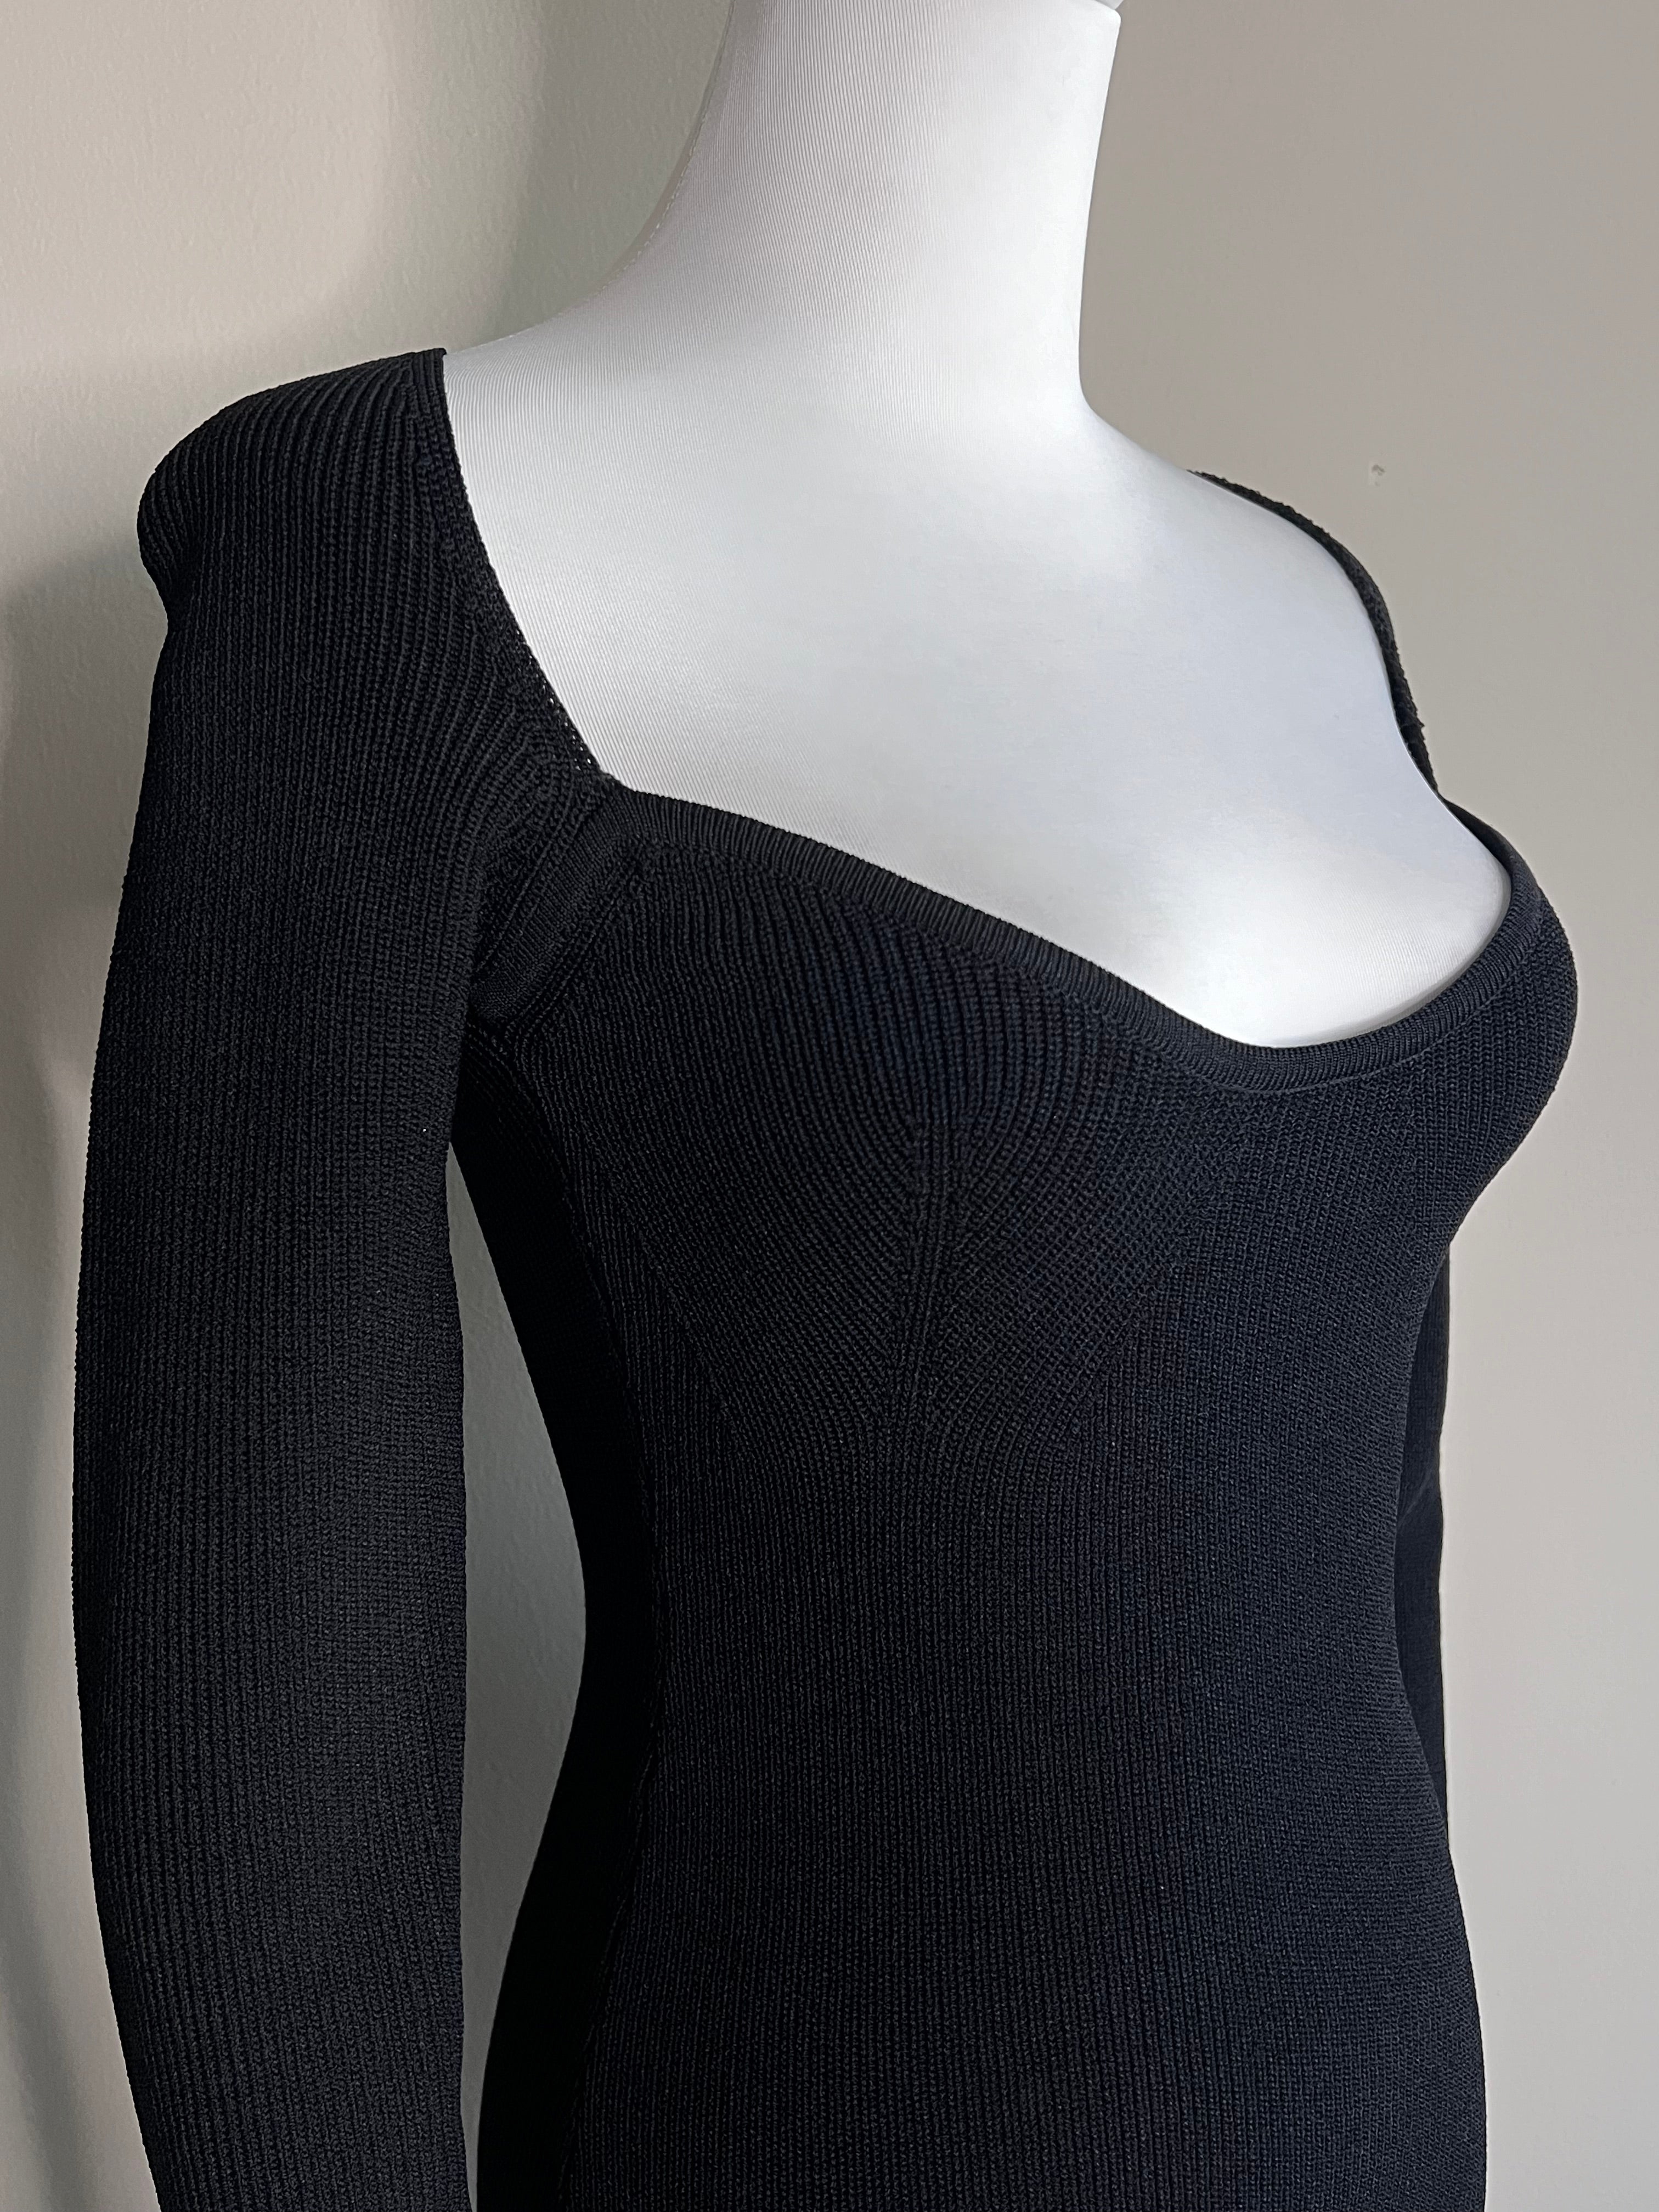 Black Modal Square Neck long sleeve mini dress - All the ways